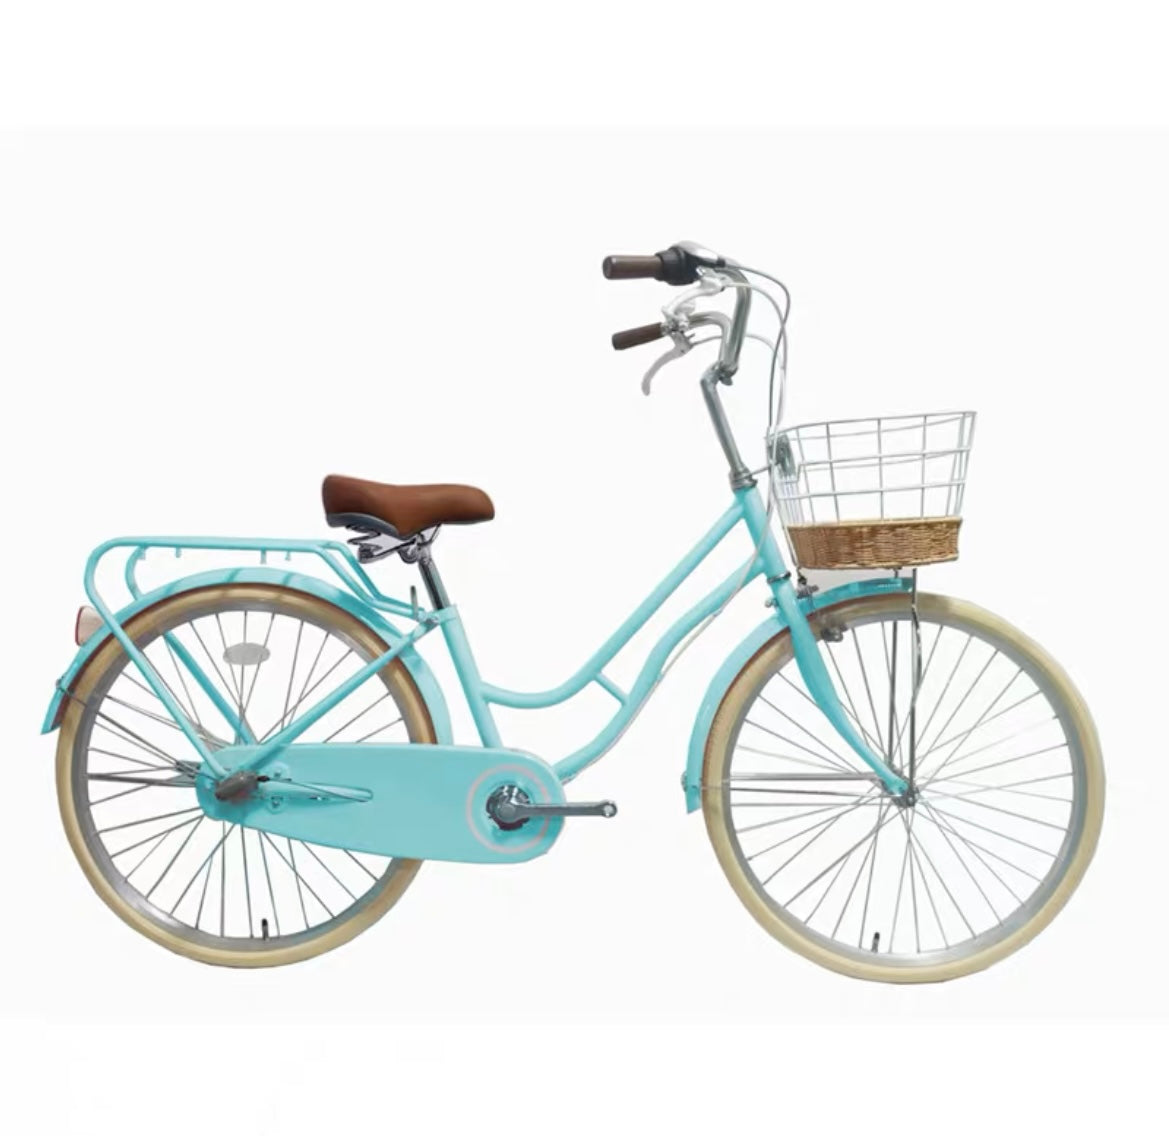 UC24 model City Bike, Mint 24 inch 6 speeds c/w basket and rear rack